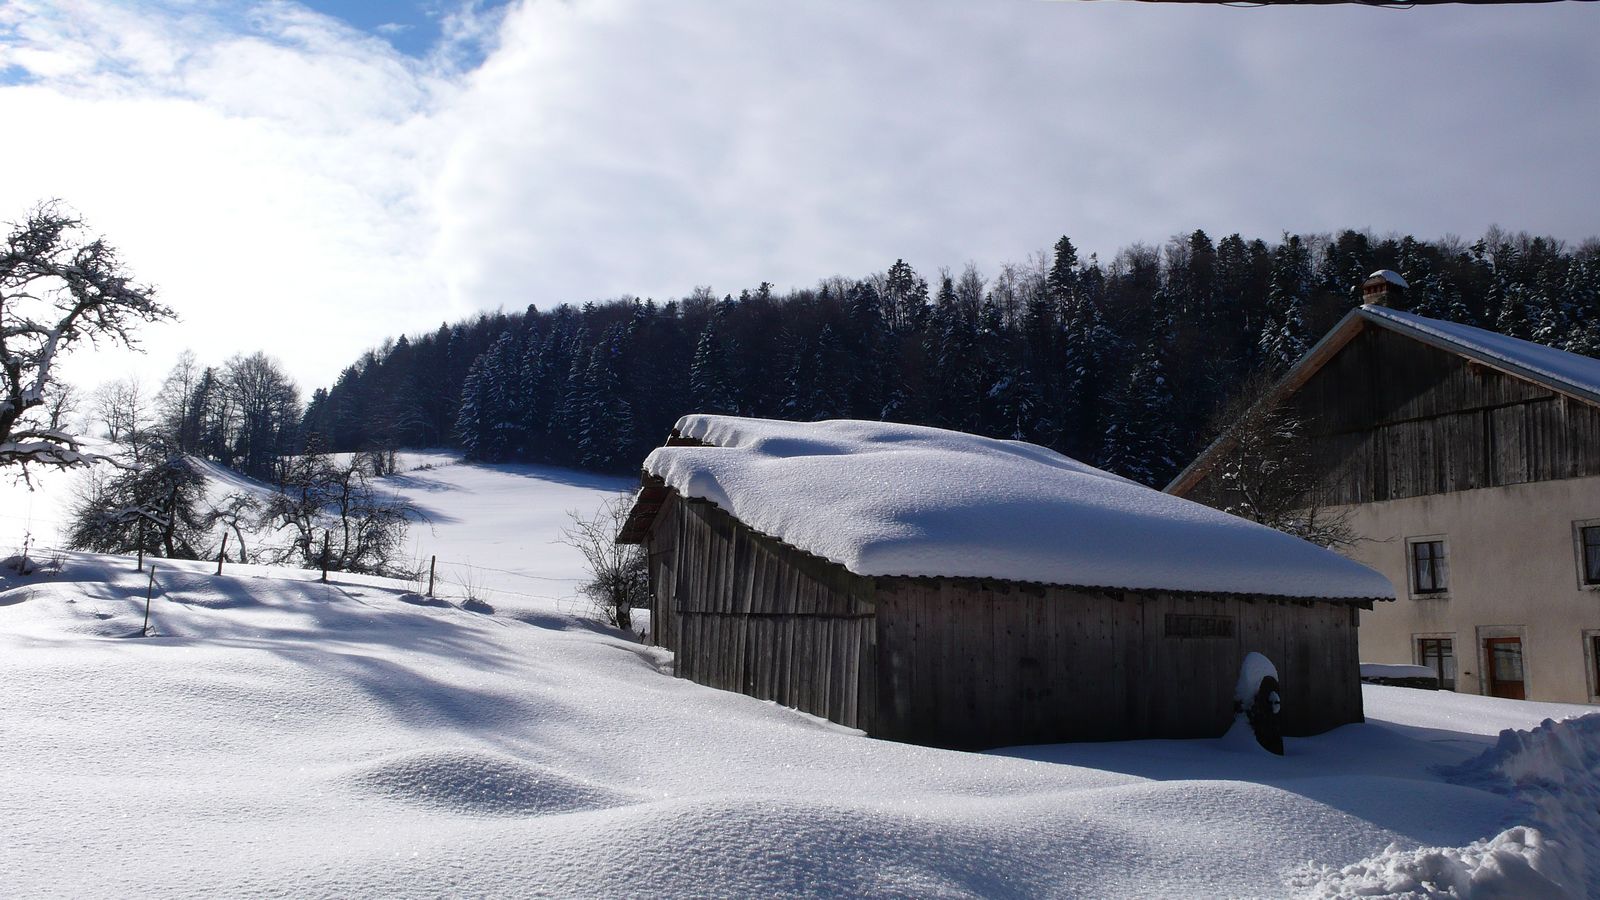 En hiver - Photo Claude Schneider - Copyrigth